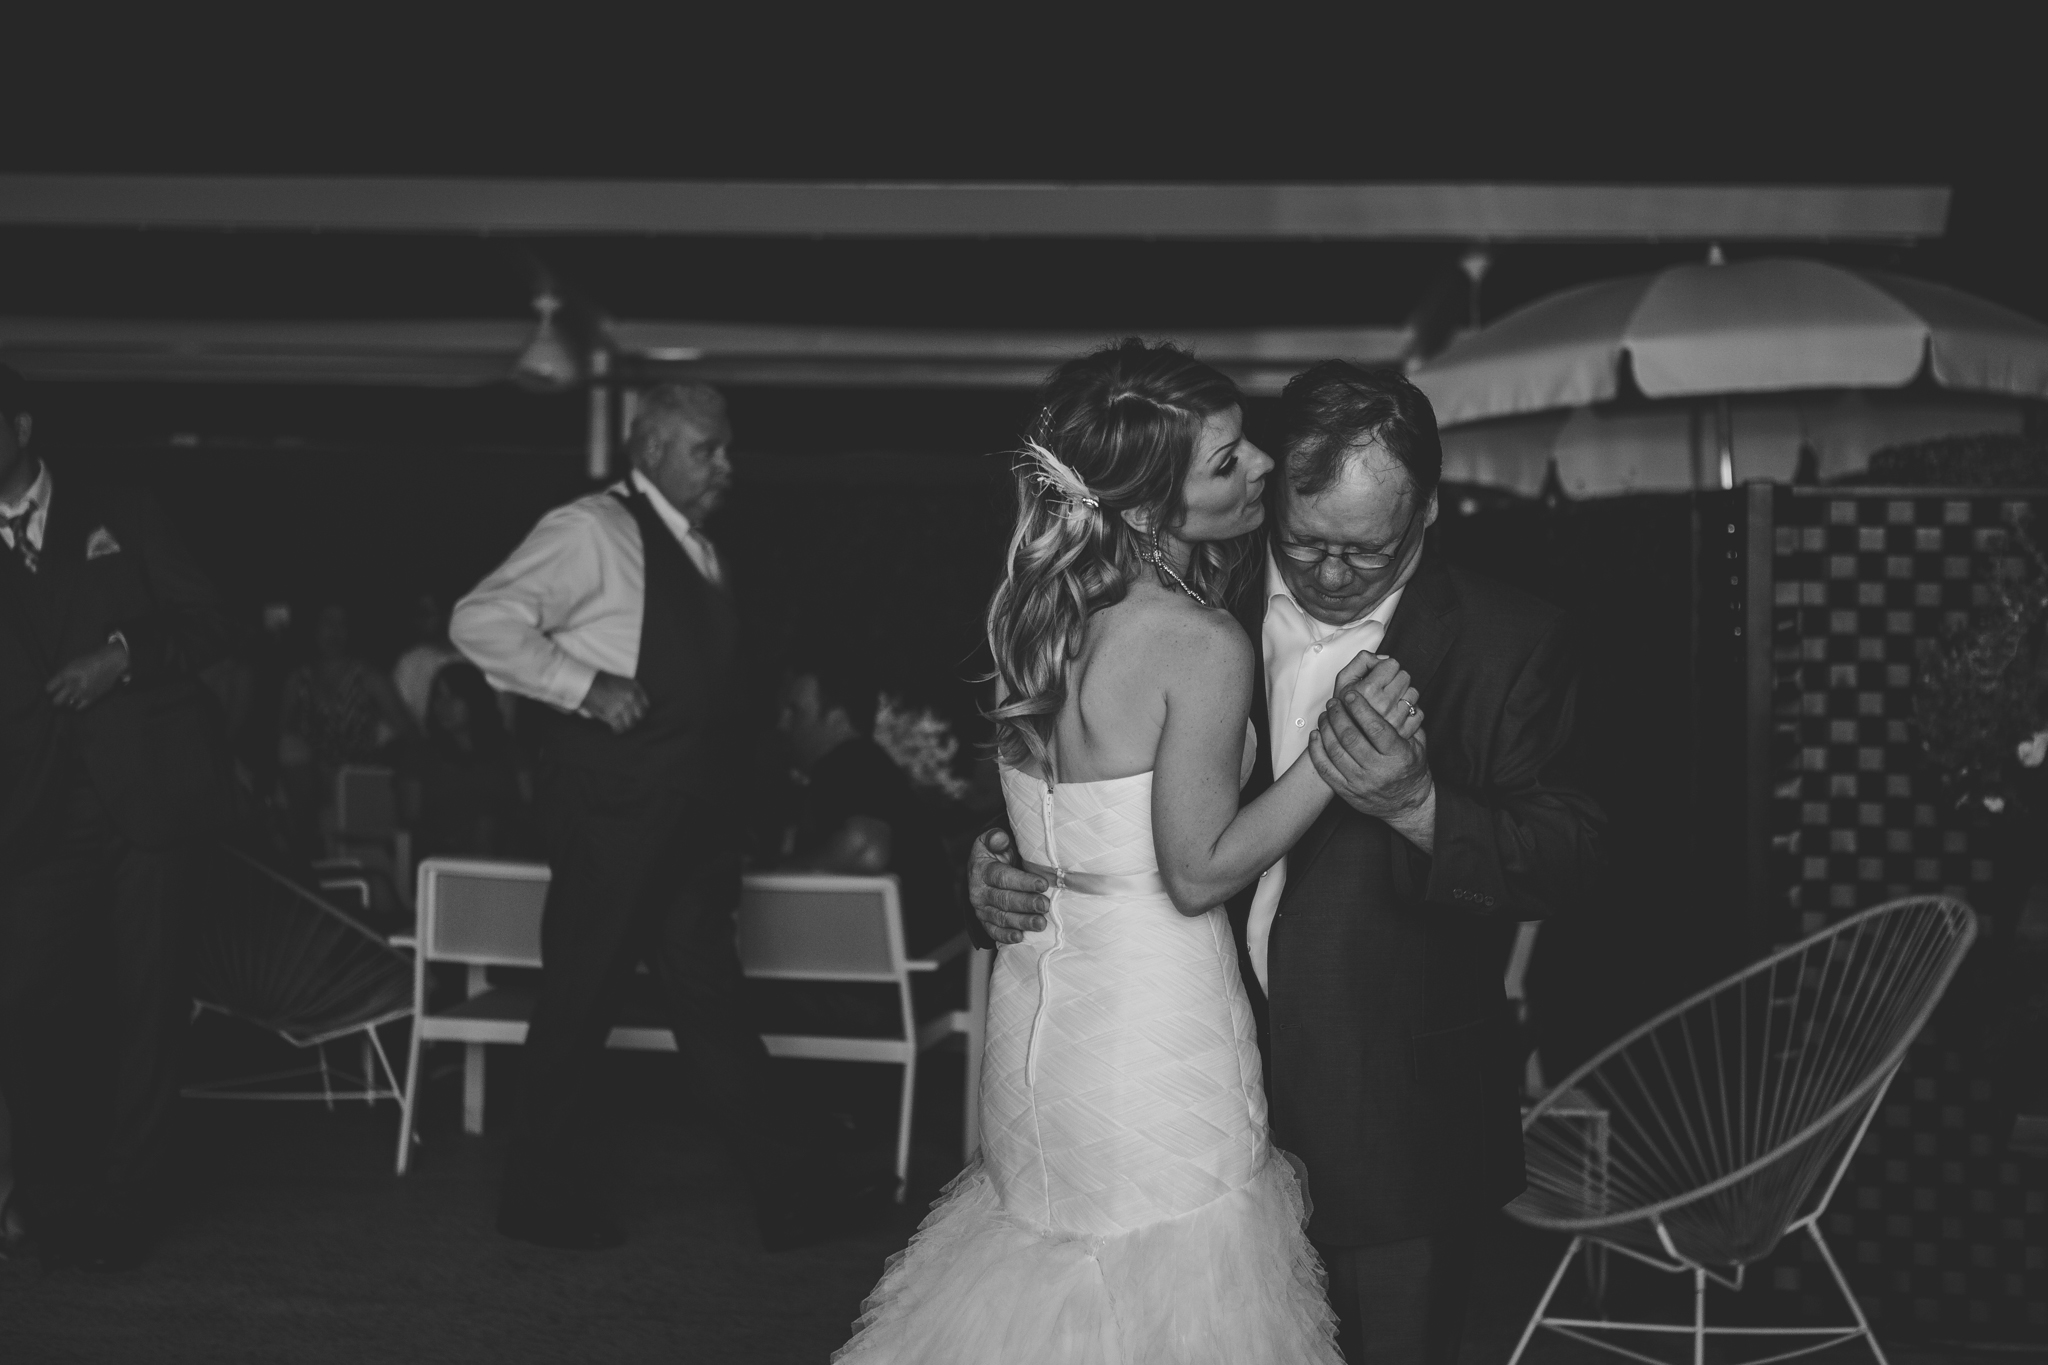 as-wedding-photography-el-dorado-scottsdale-daughter-father-dance-bw